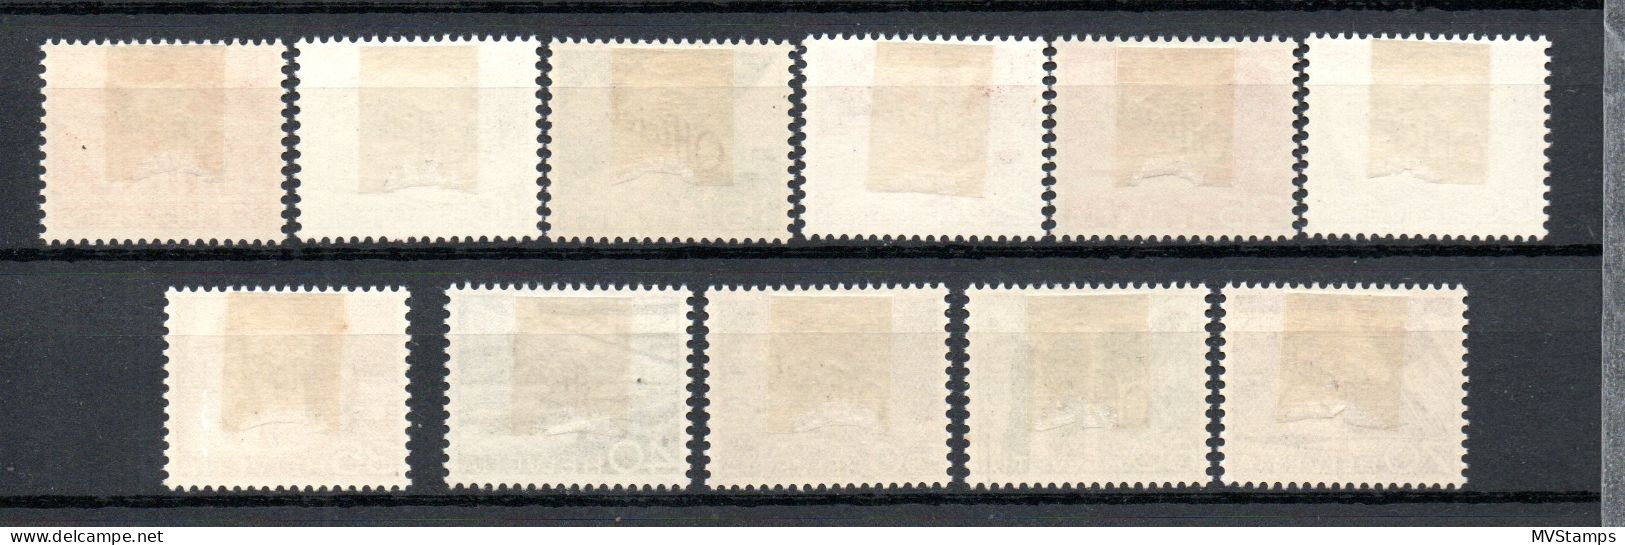 Switzerland 1950 Set Overprinted Service Stamps (Michel D 64/74) MLH - Officials